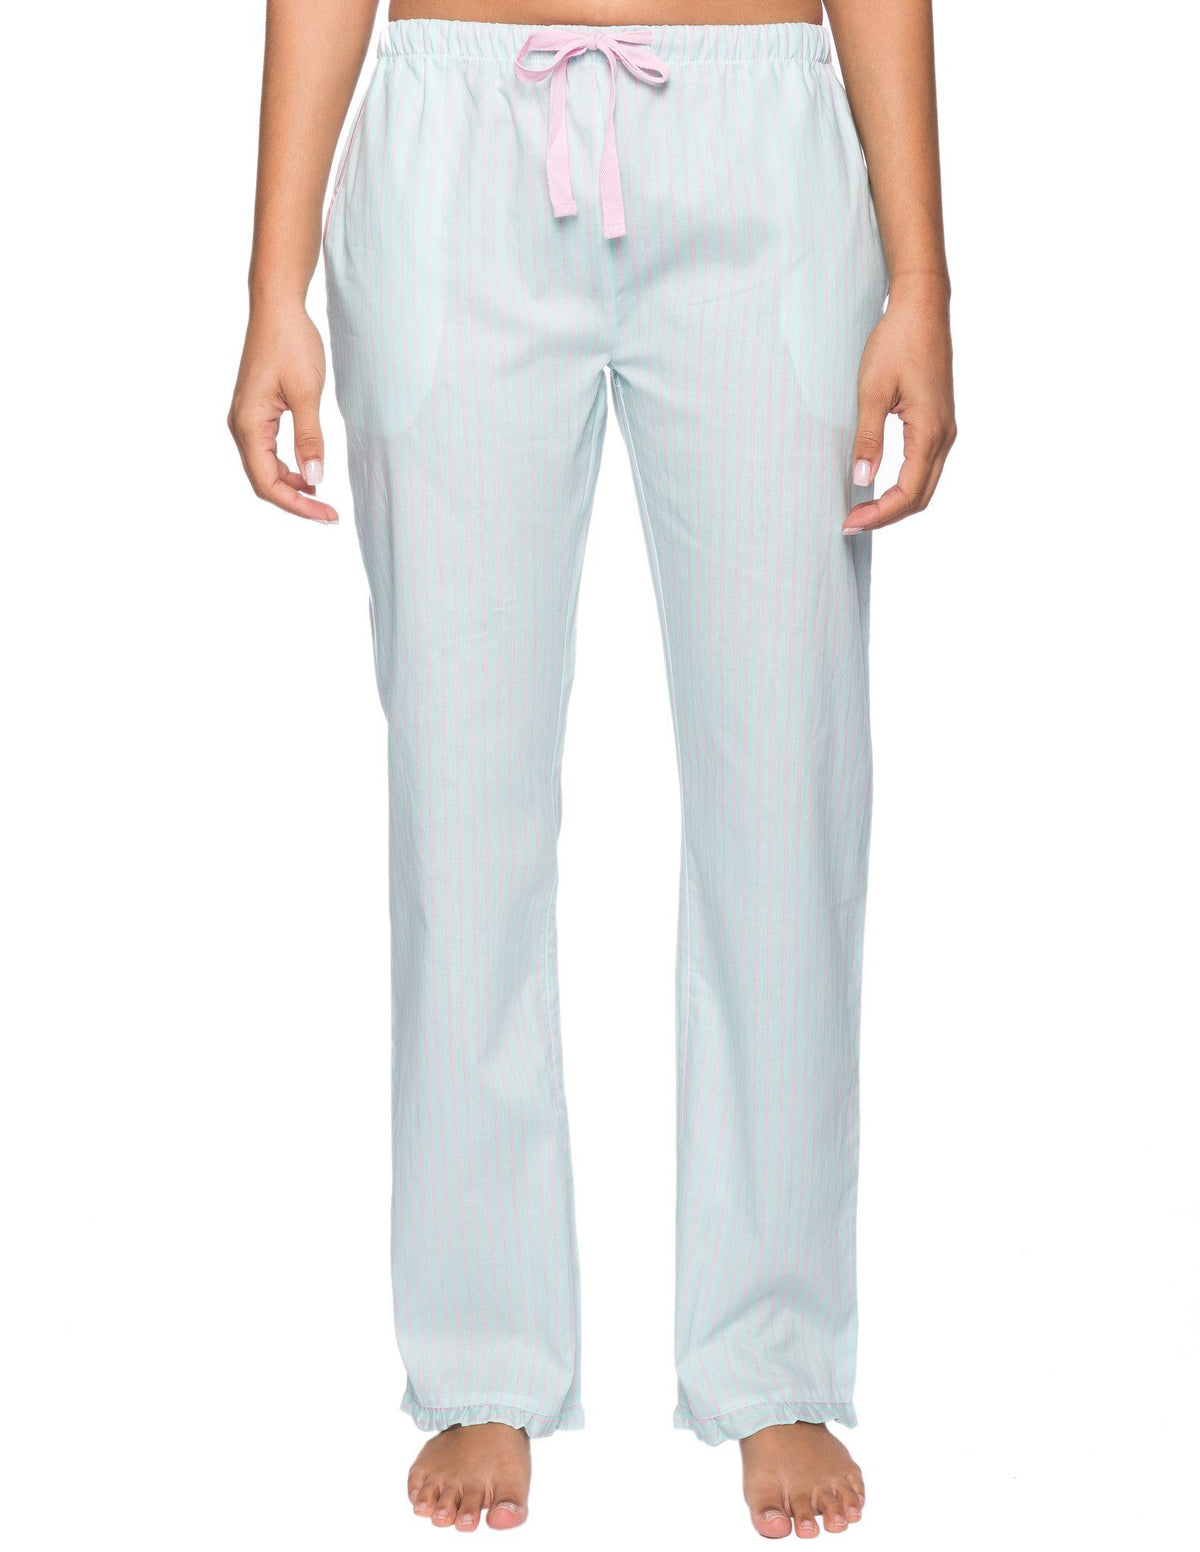 Womens Premium 100% Cotton Poplin Lounge/Sleep Pants - Free Stripe - Aqua/Pink